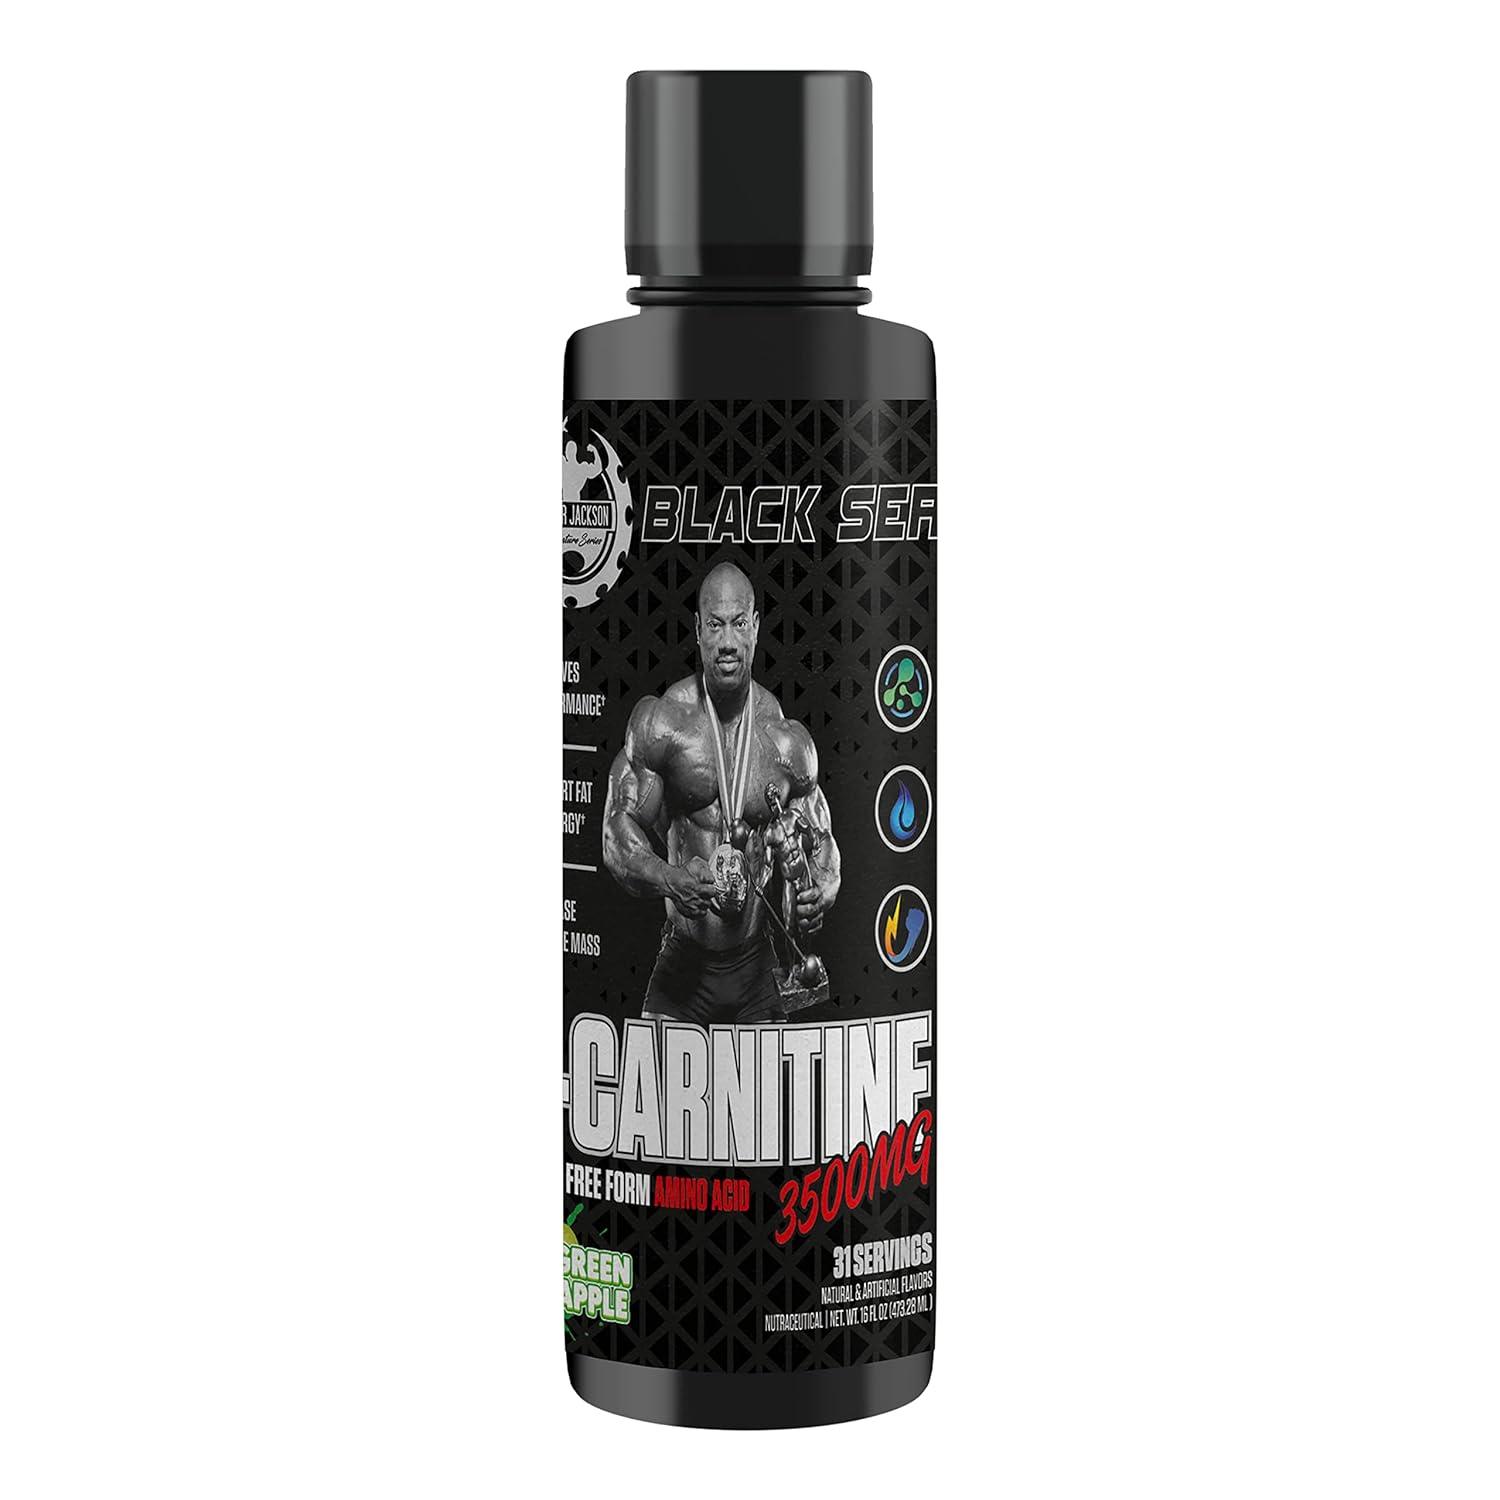 Dexter Jackson Black Series Carnitine liquid - Wellness Shoppee